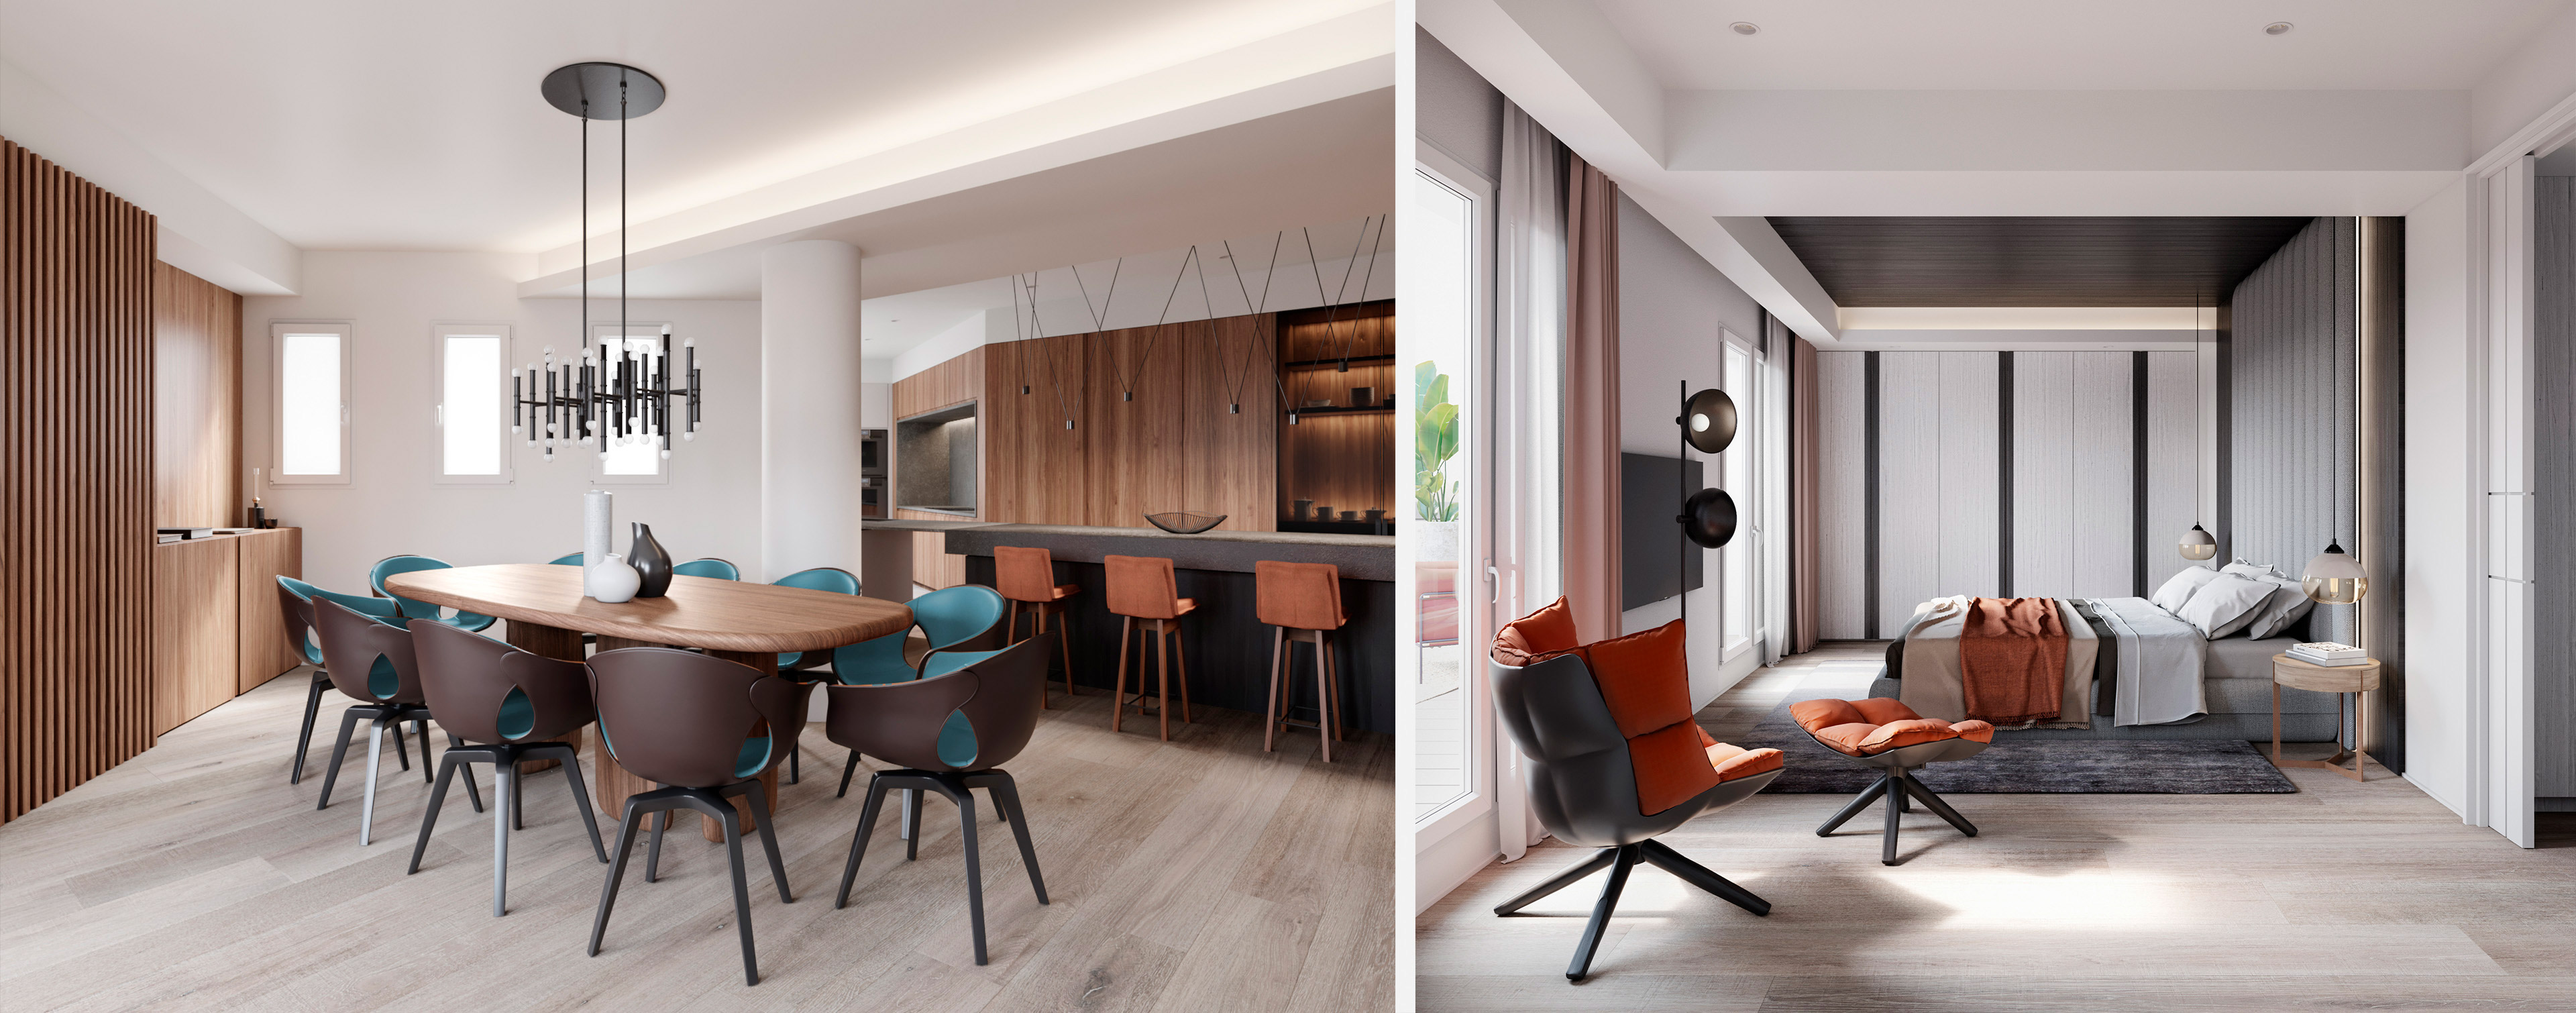 luv studio luxury architects barcelona mallorca penthouse apartment IMG 01 - Mallorca Apartment